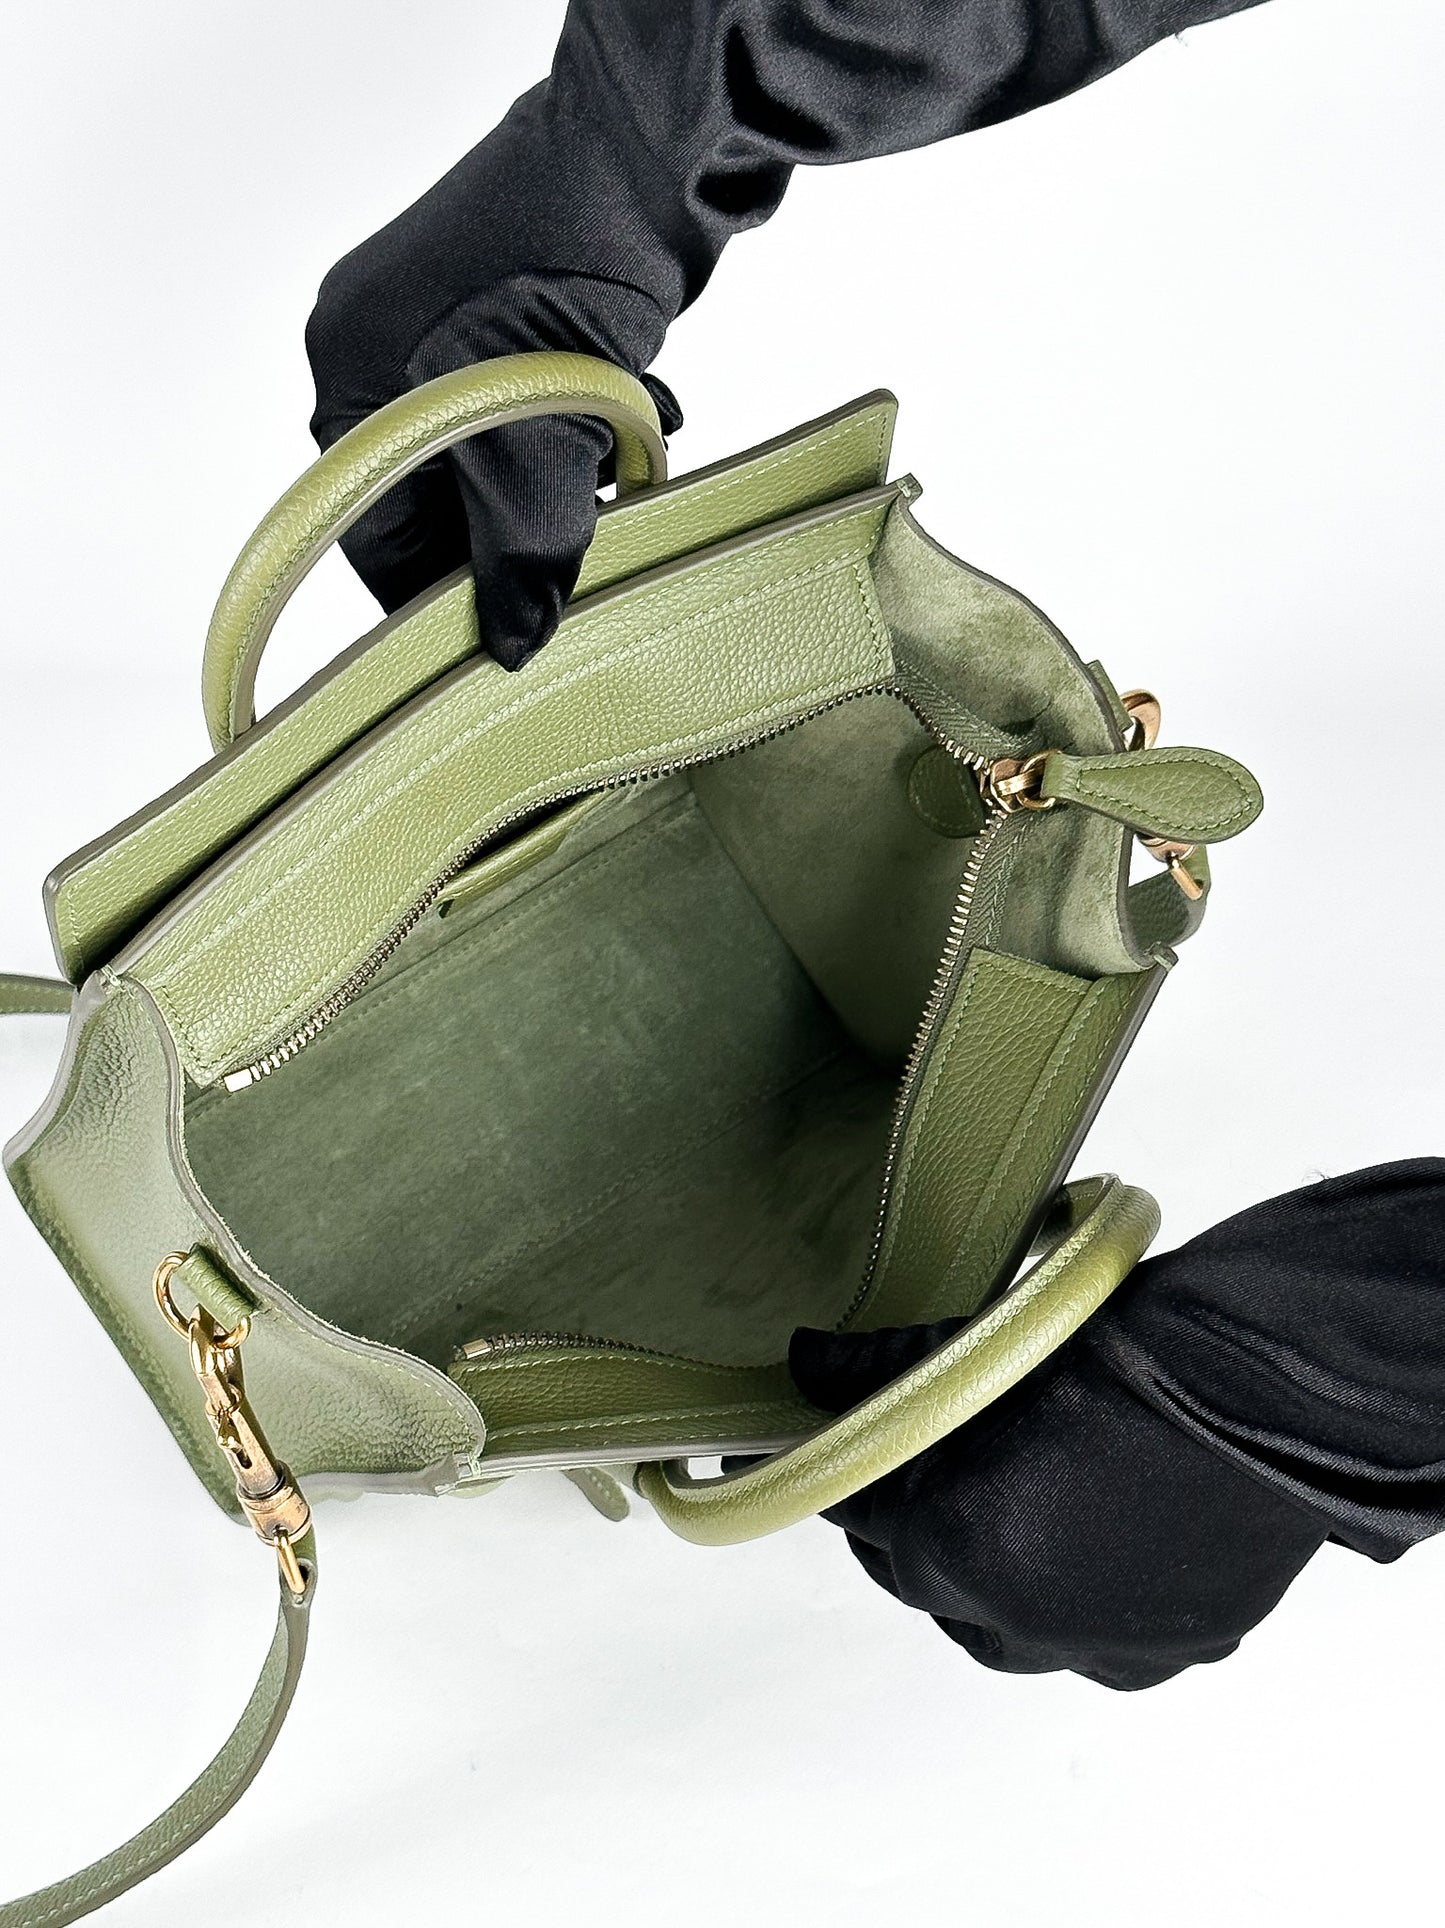 Celine Nano Luggage in Drummed Calfskin
Light Khaki